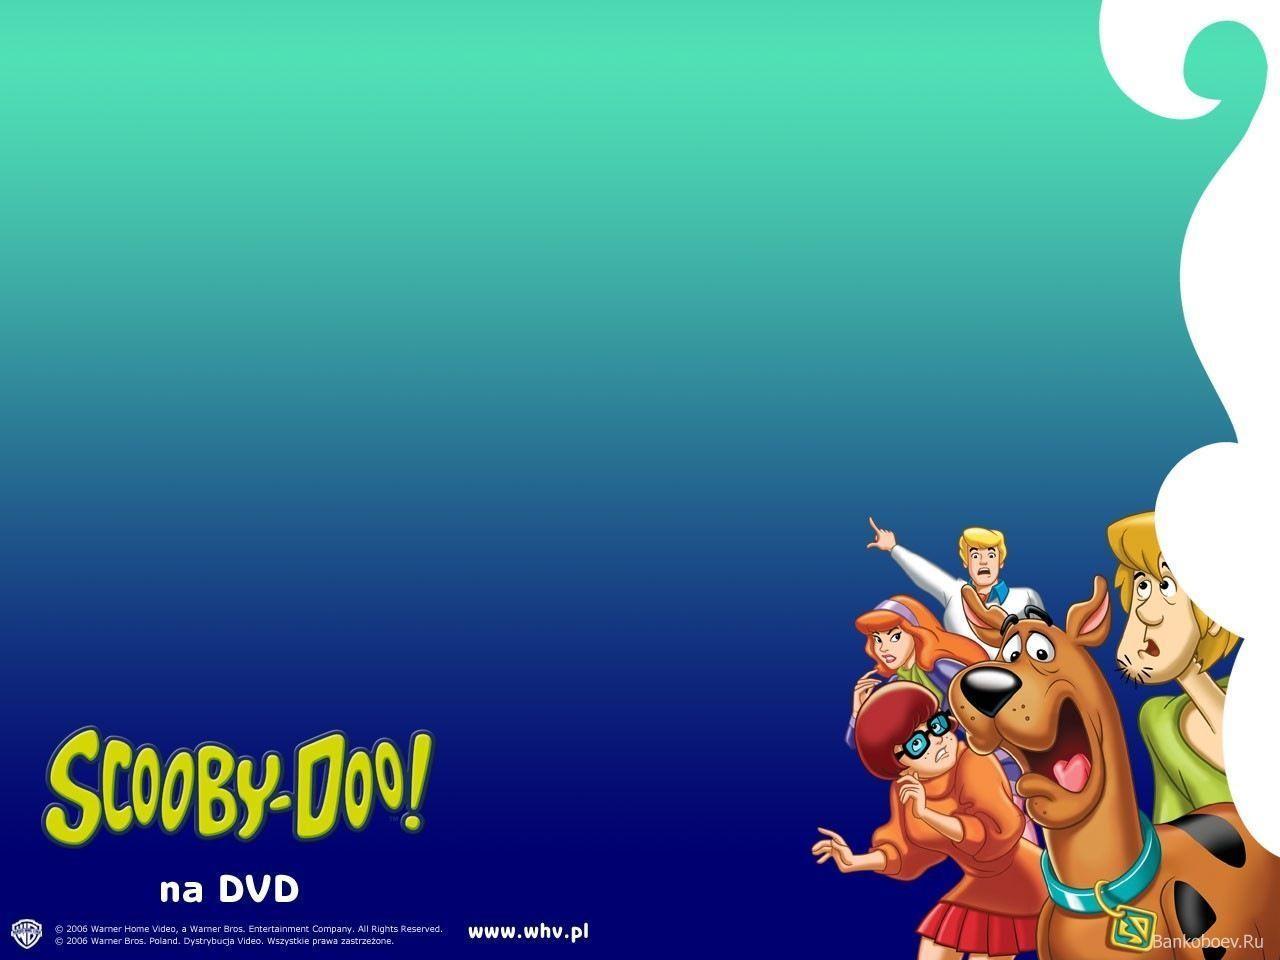 ScoobyDoo Disney Cartoon Wallpaper Border  Blue Brown Orange  Kids  Baby Room Roll 15 x 675  Amazonin Home Improvement